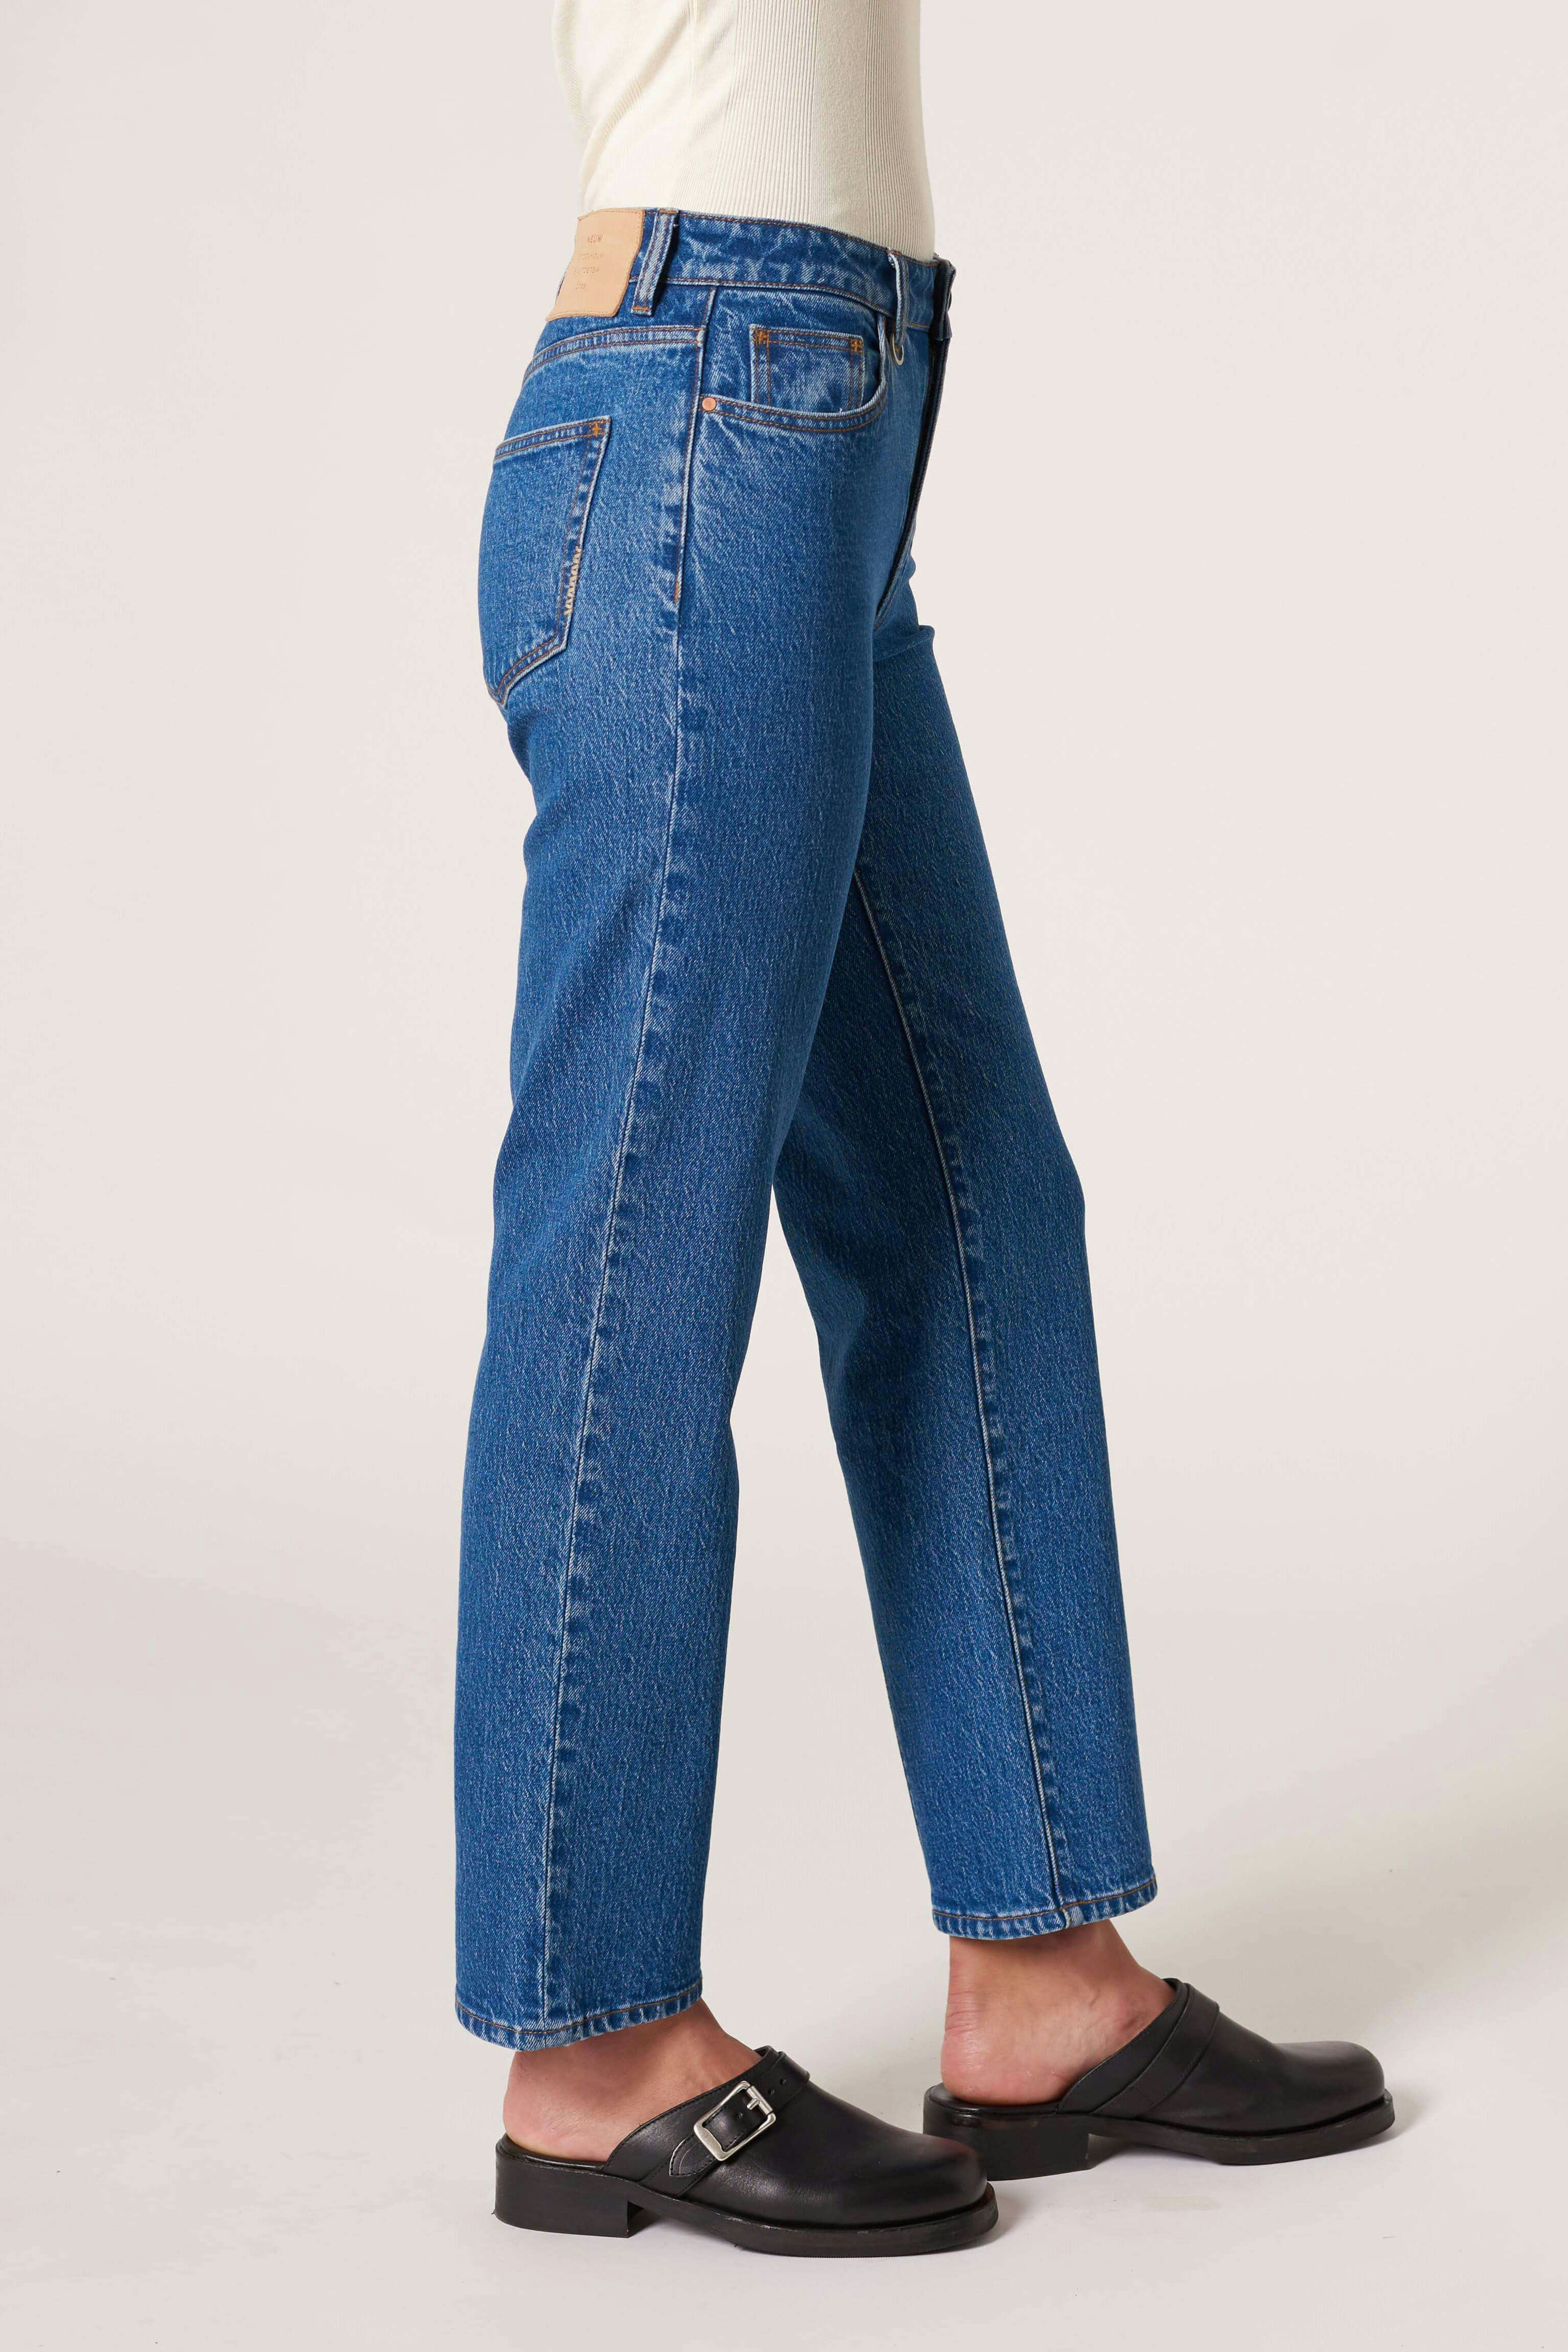 Mica Straight - Brighton Neuw mid darkblue womens-jeans 